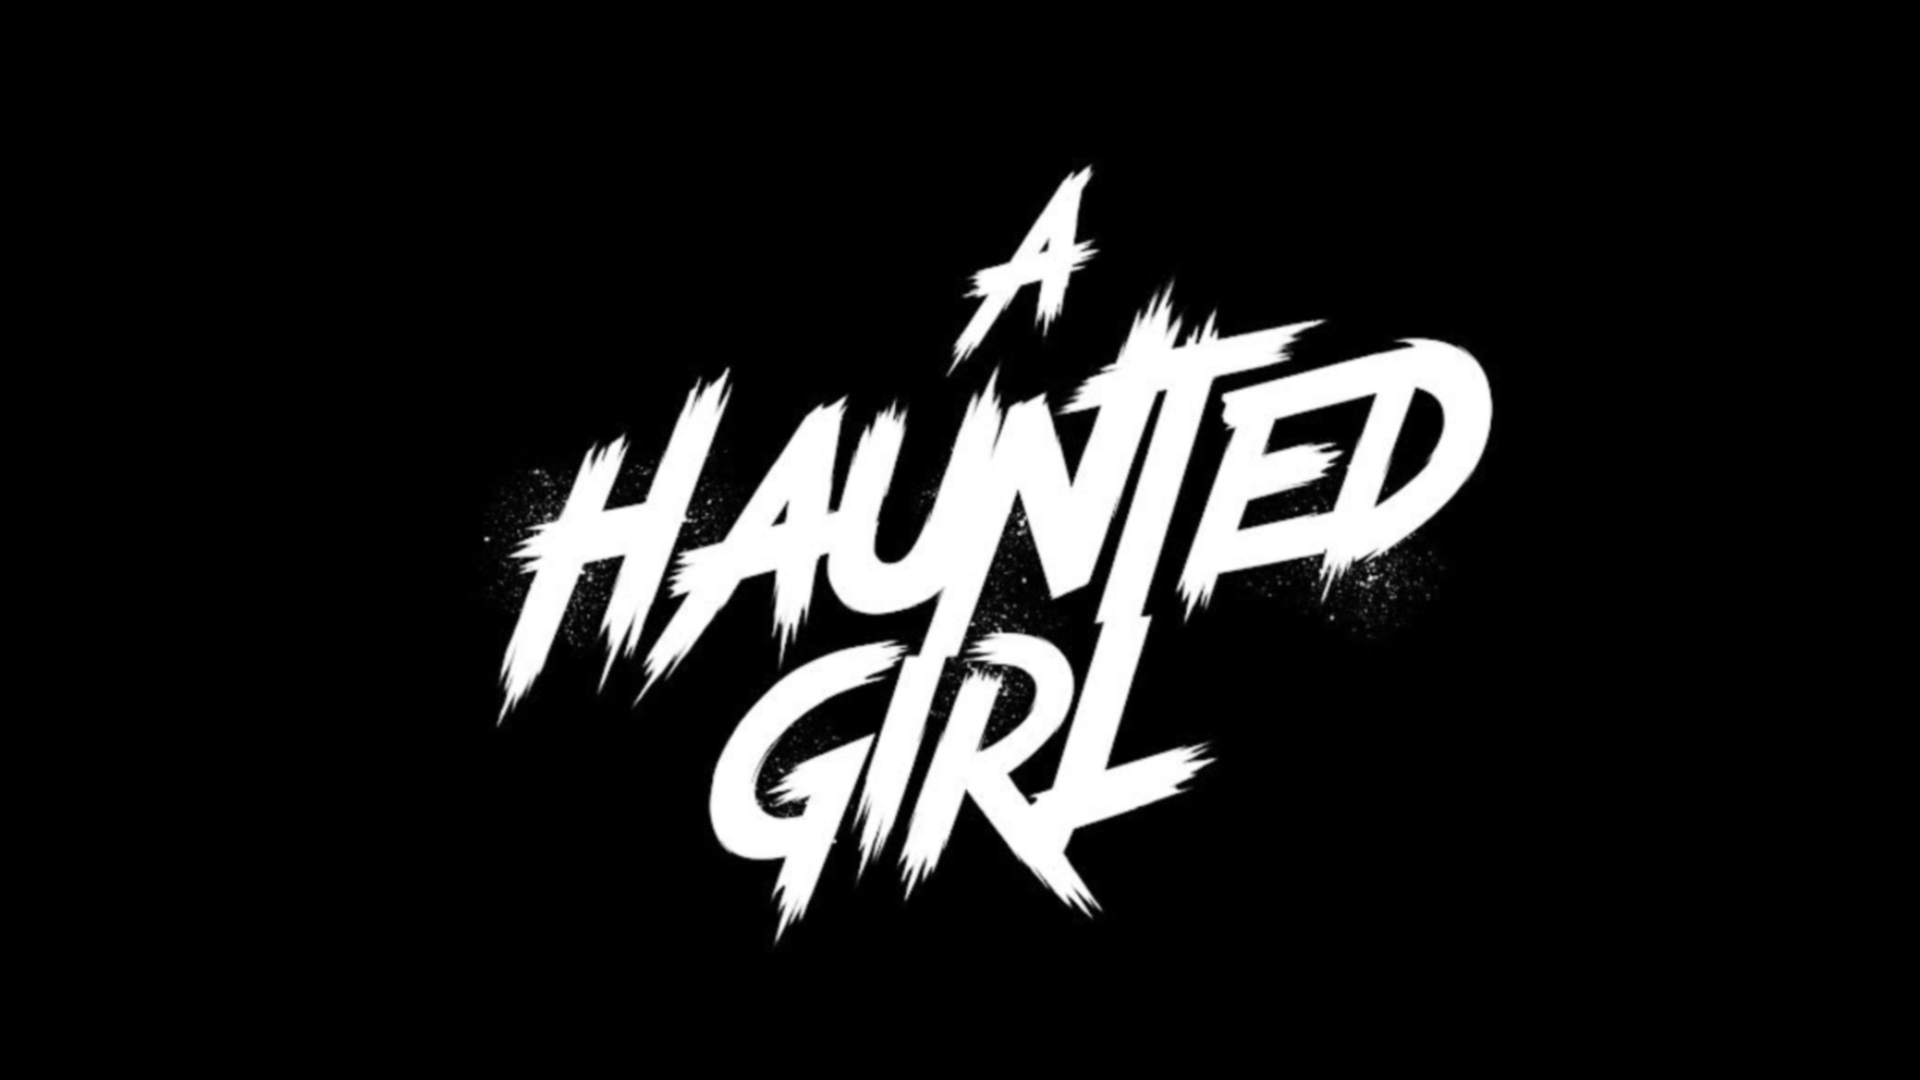 A haunted girl